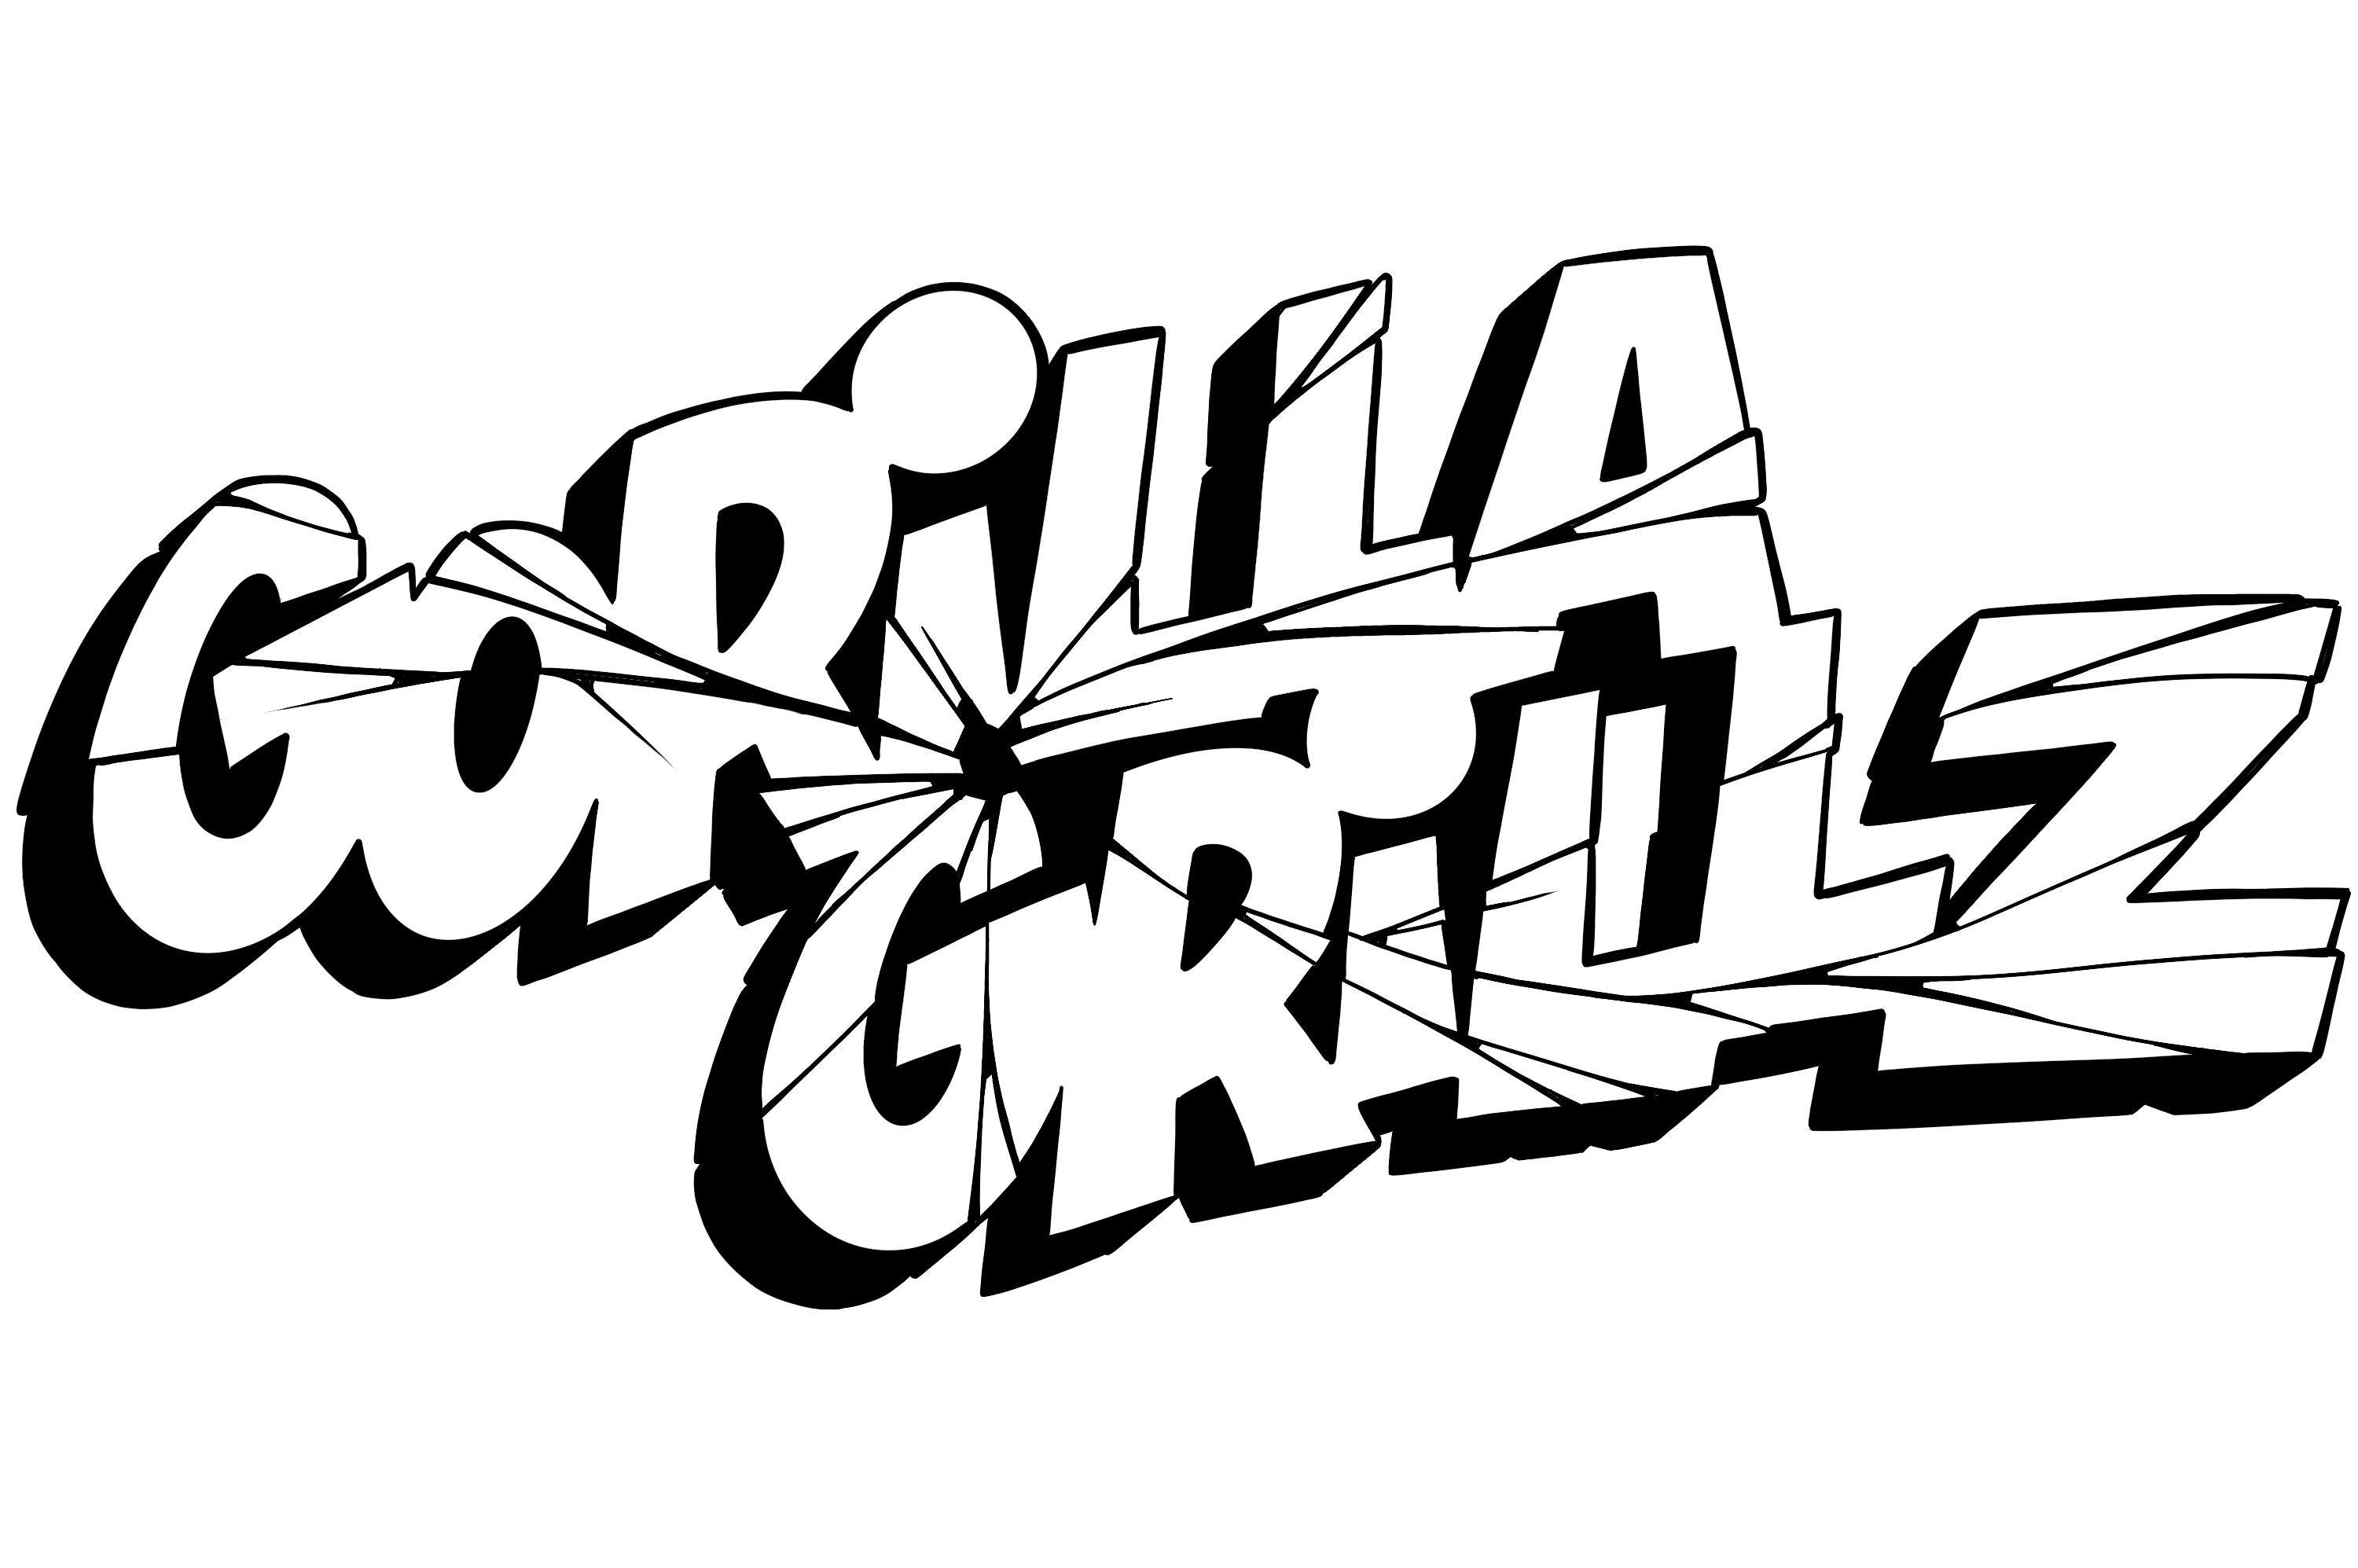 Gorilla Grillz